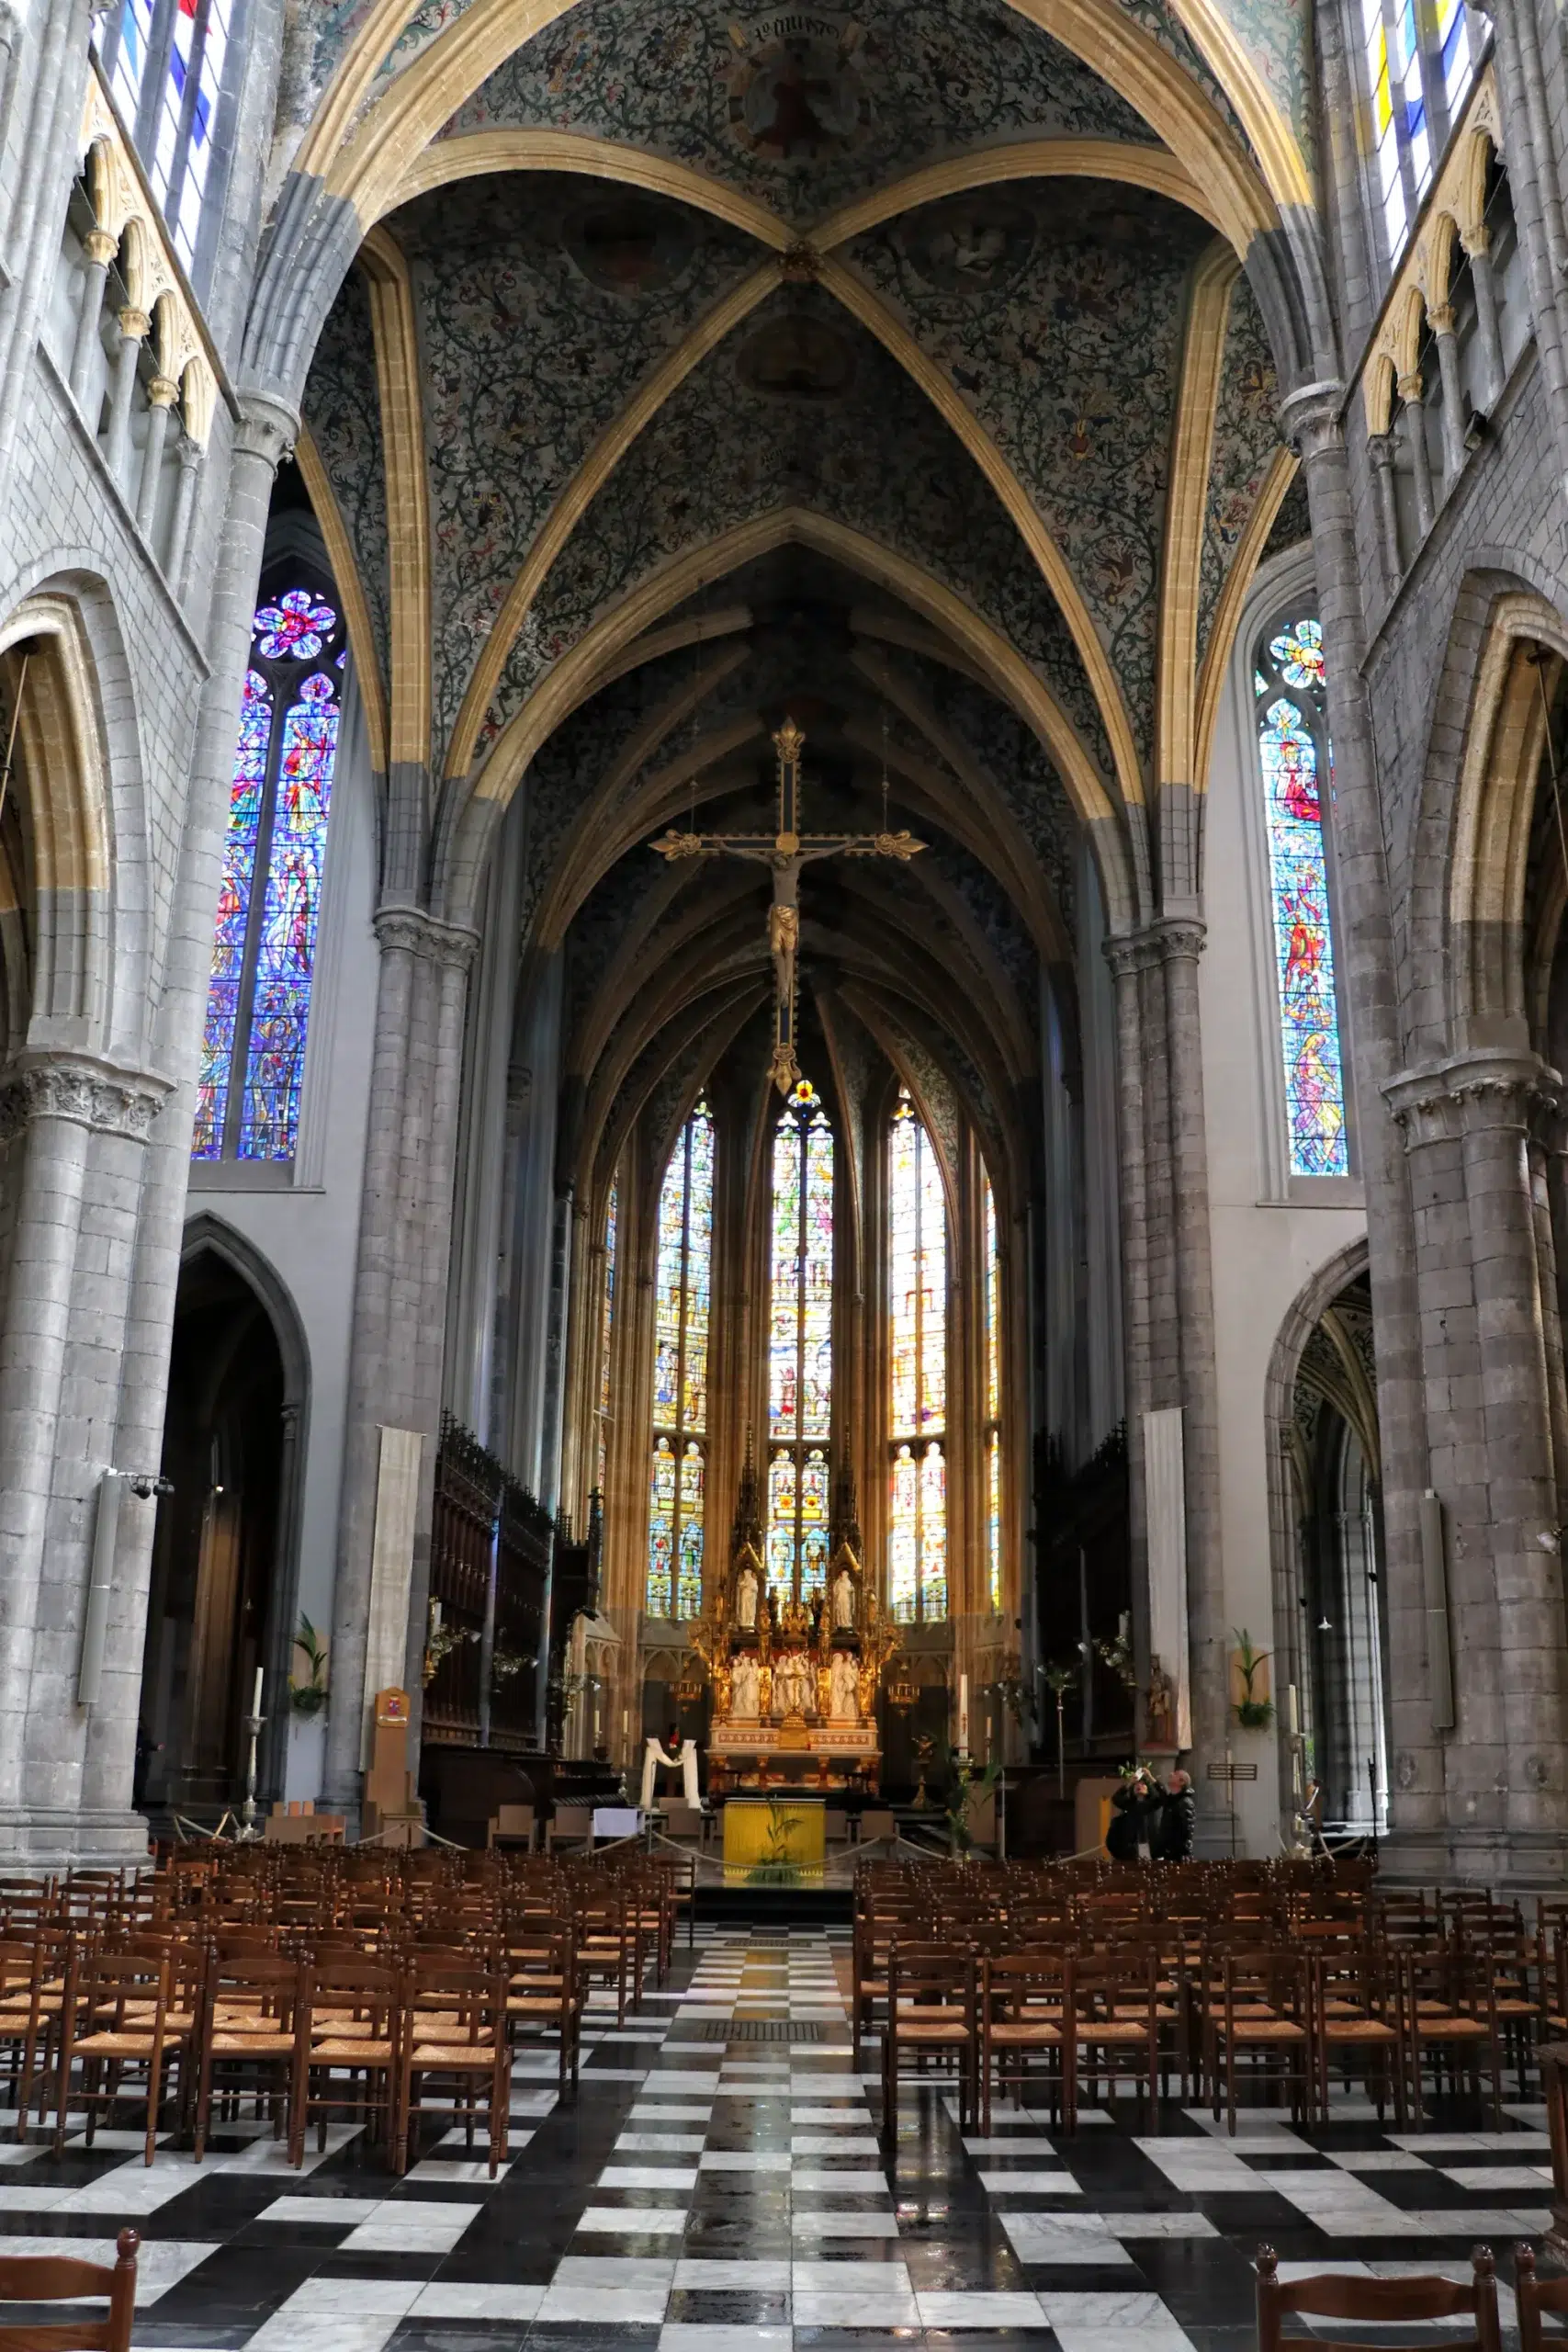 St. Pauluskathedraal - Luik, België